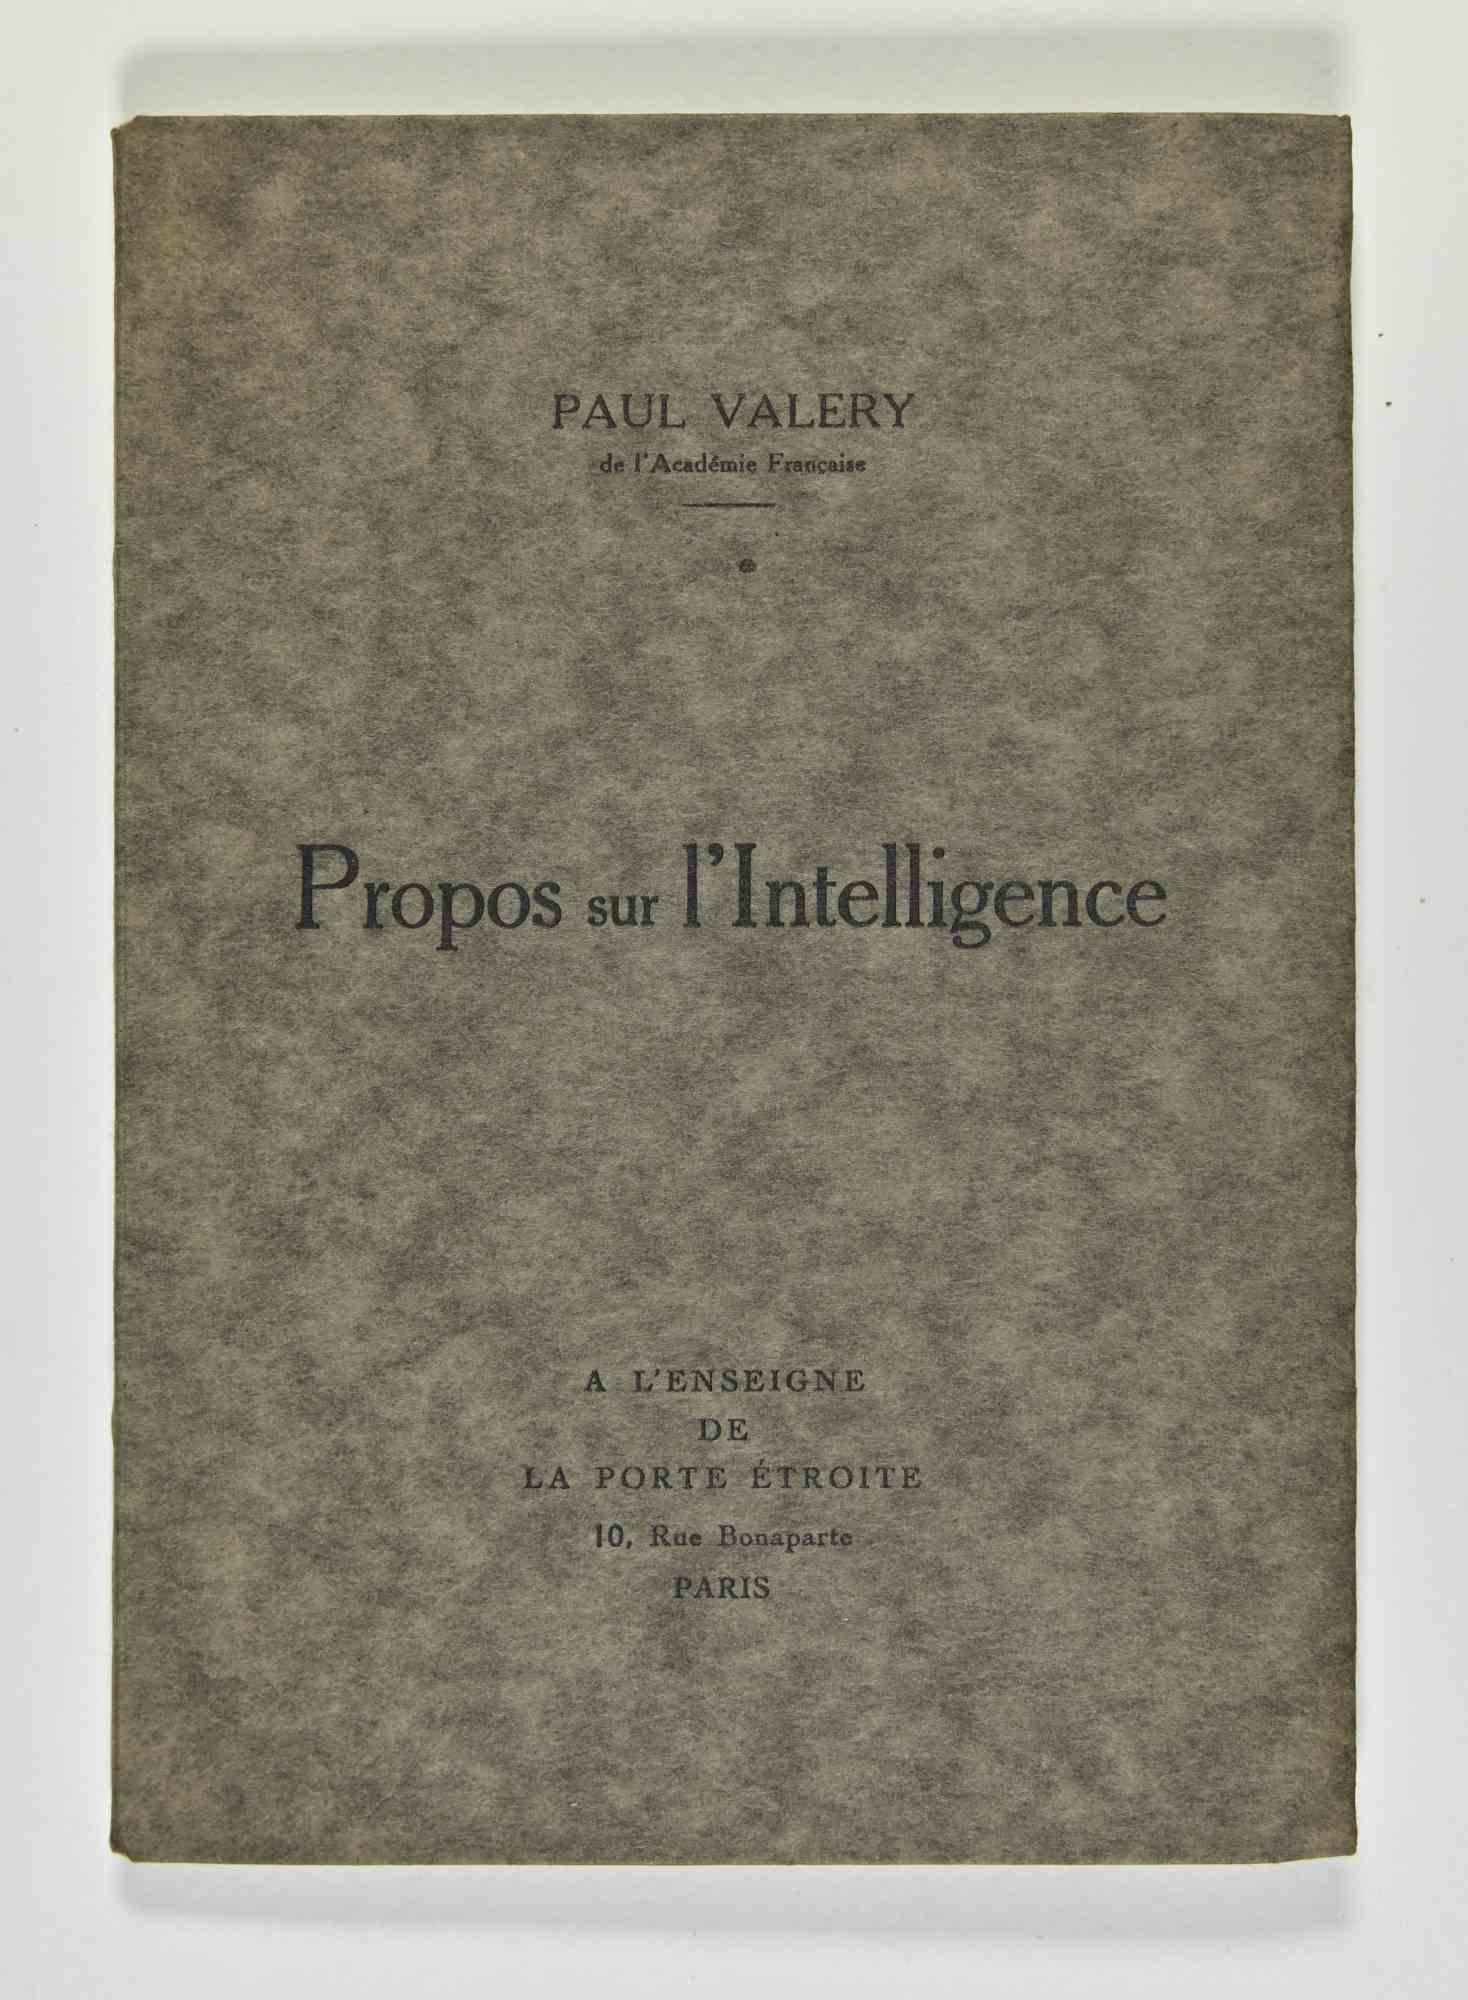 Propos sur L'Intelligence book written by Paul Valery - 1926 - Modern Art by Jacques Villon